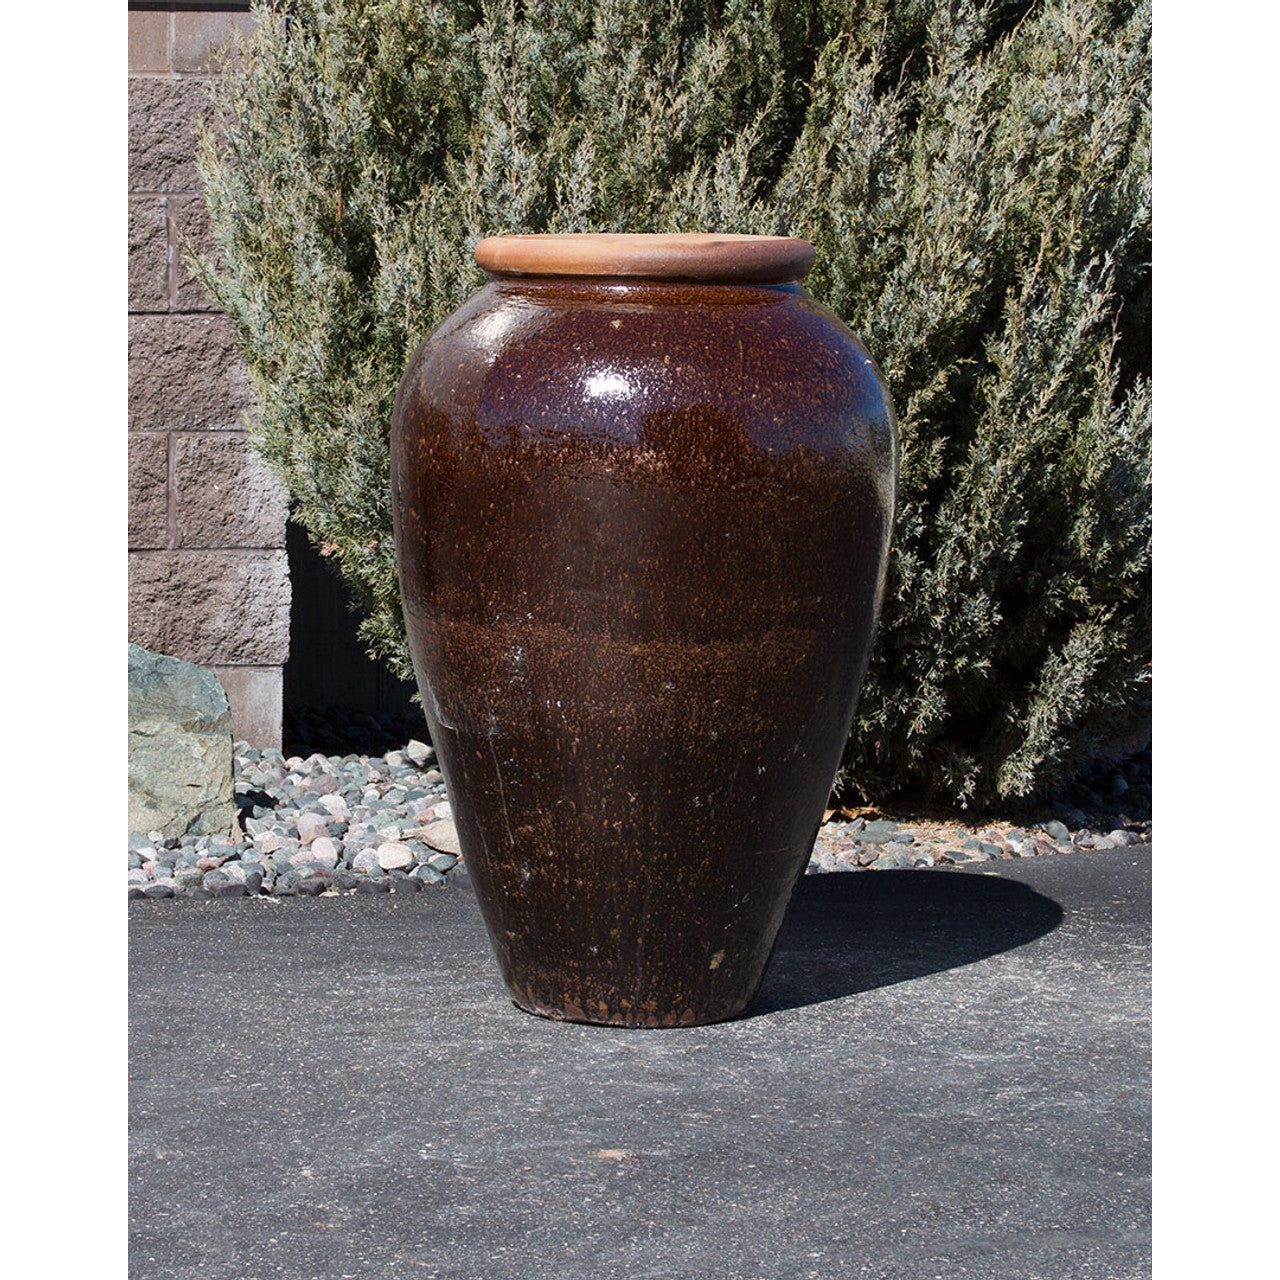 Hickory Tuscany Vase FNT40560 - Complete Fountain Kit